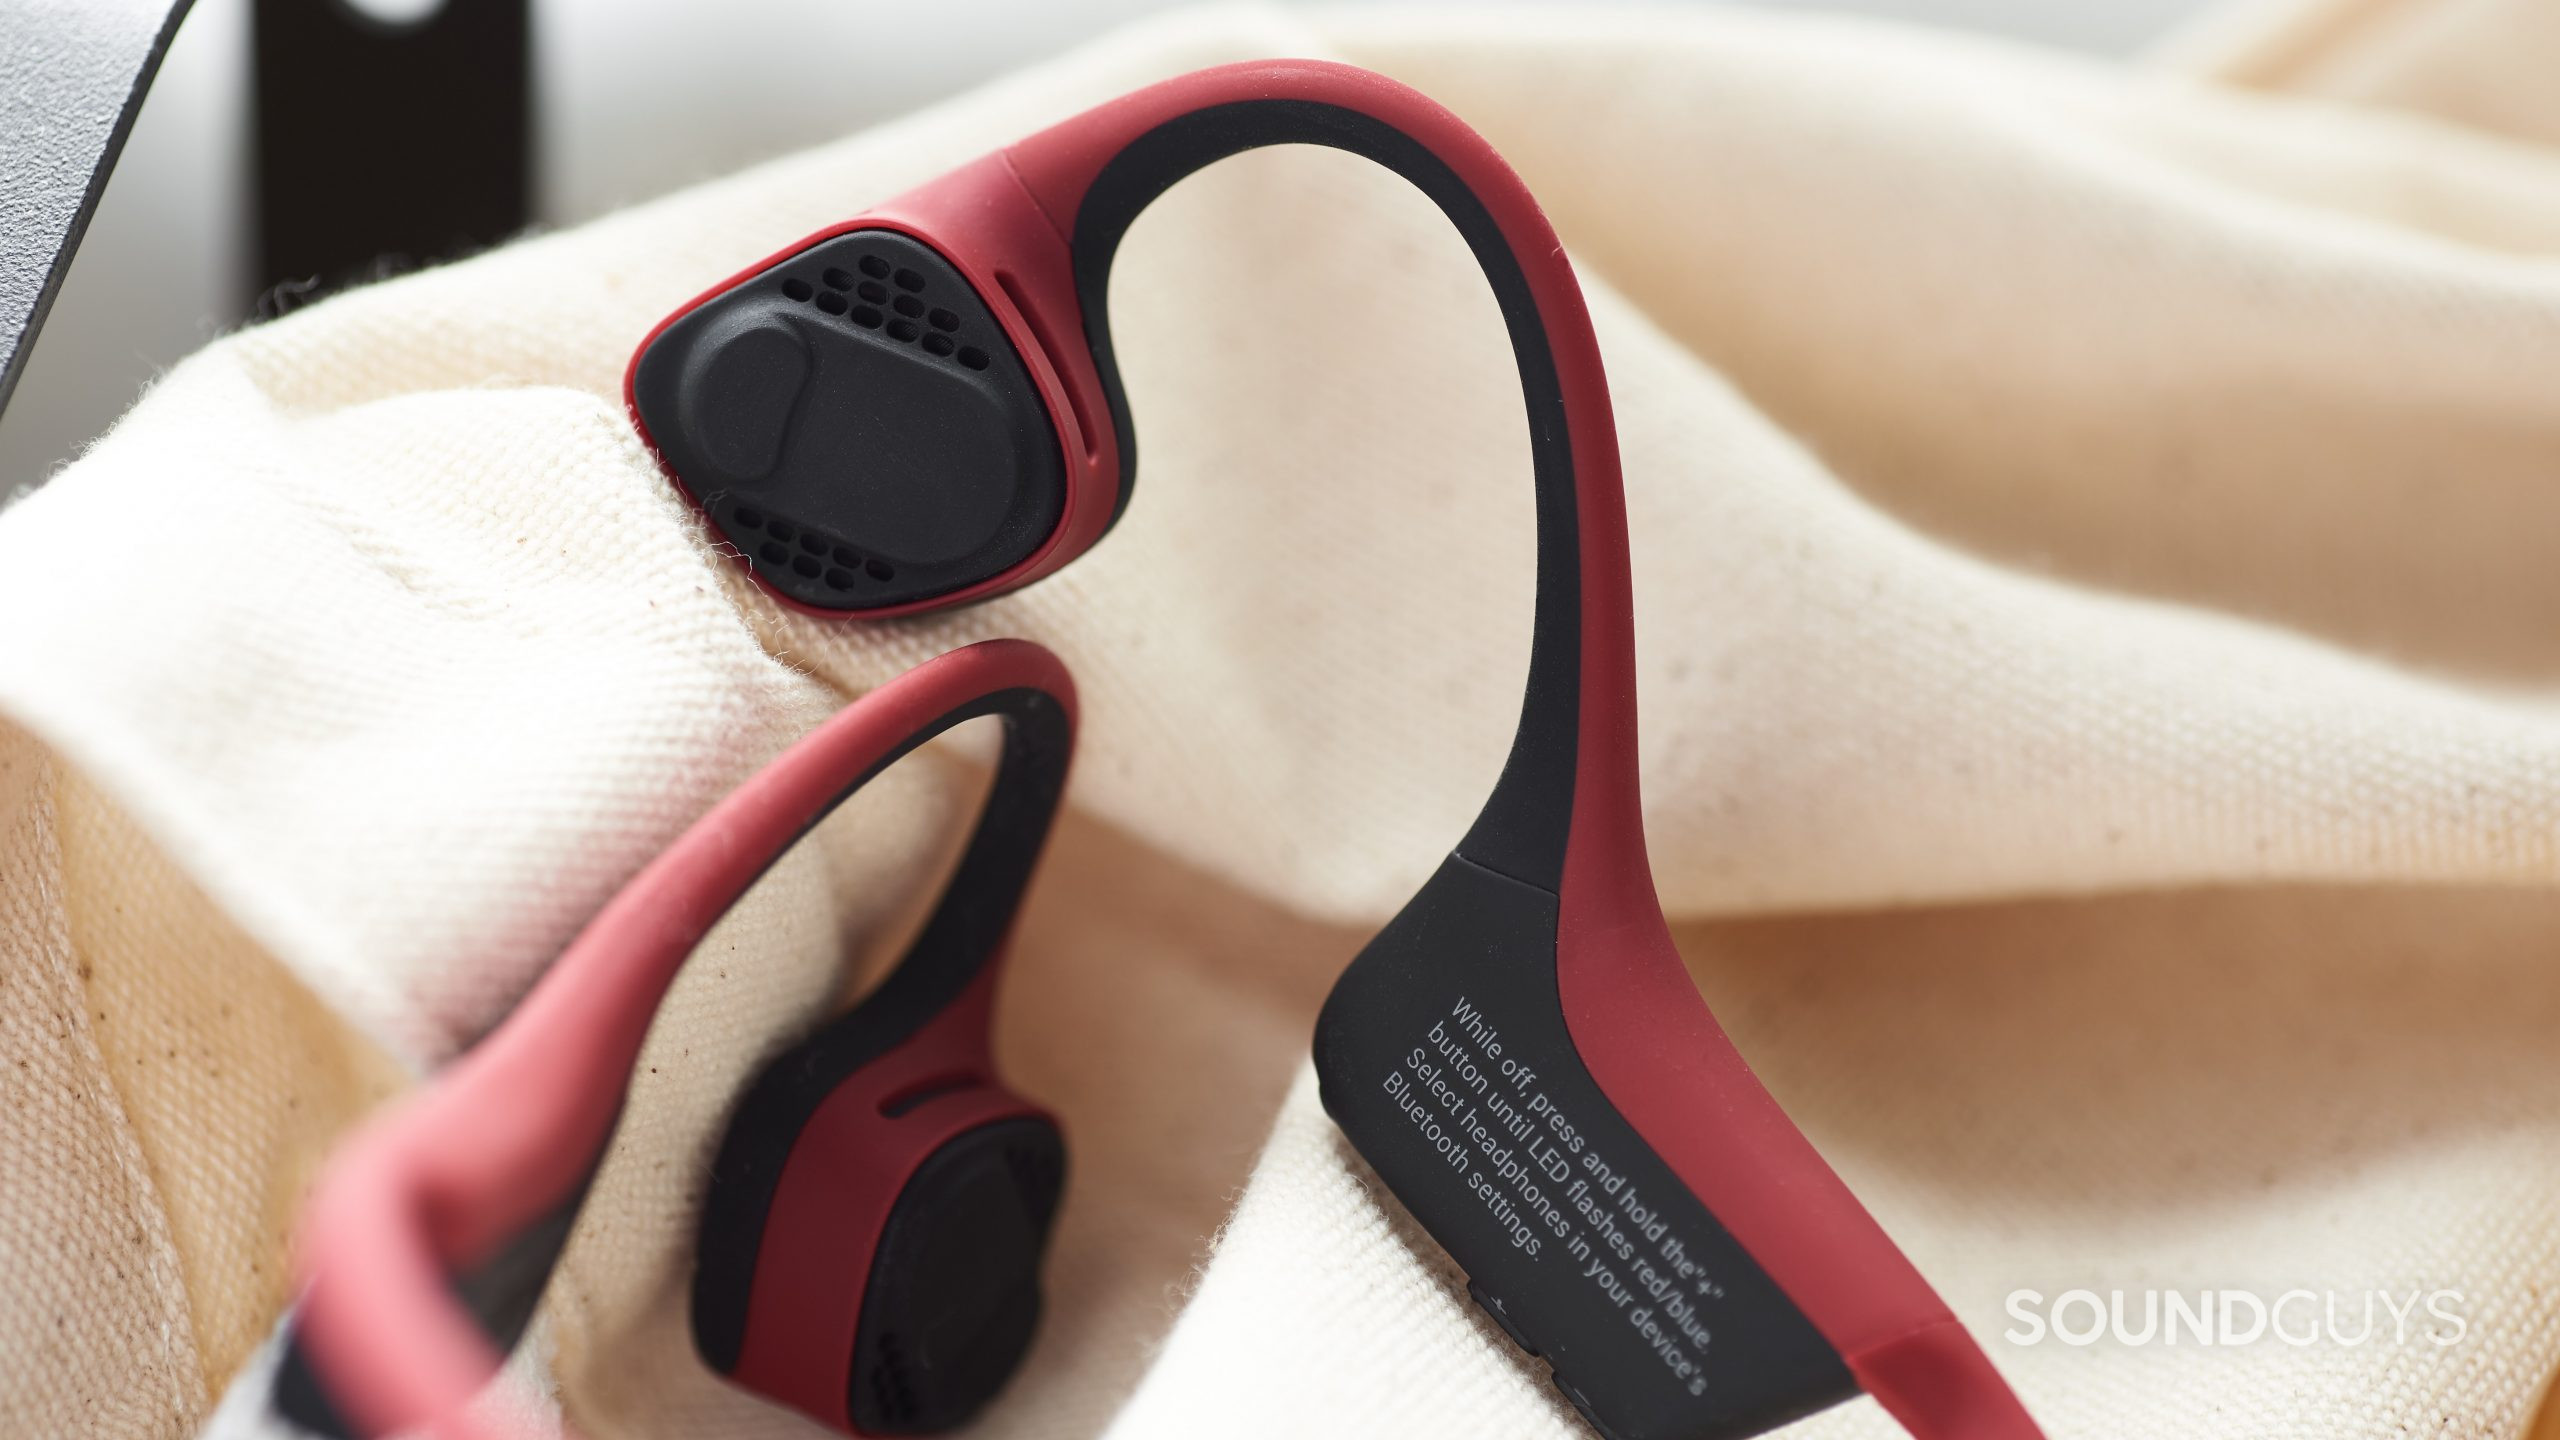 AfterShokz Trekz Air review: The best bone-conduction headphone yet - CNET